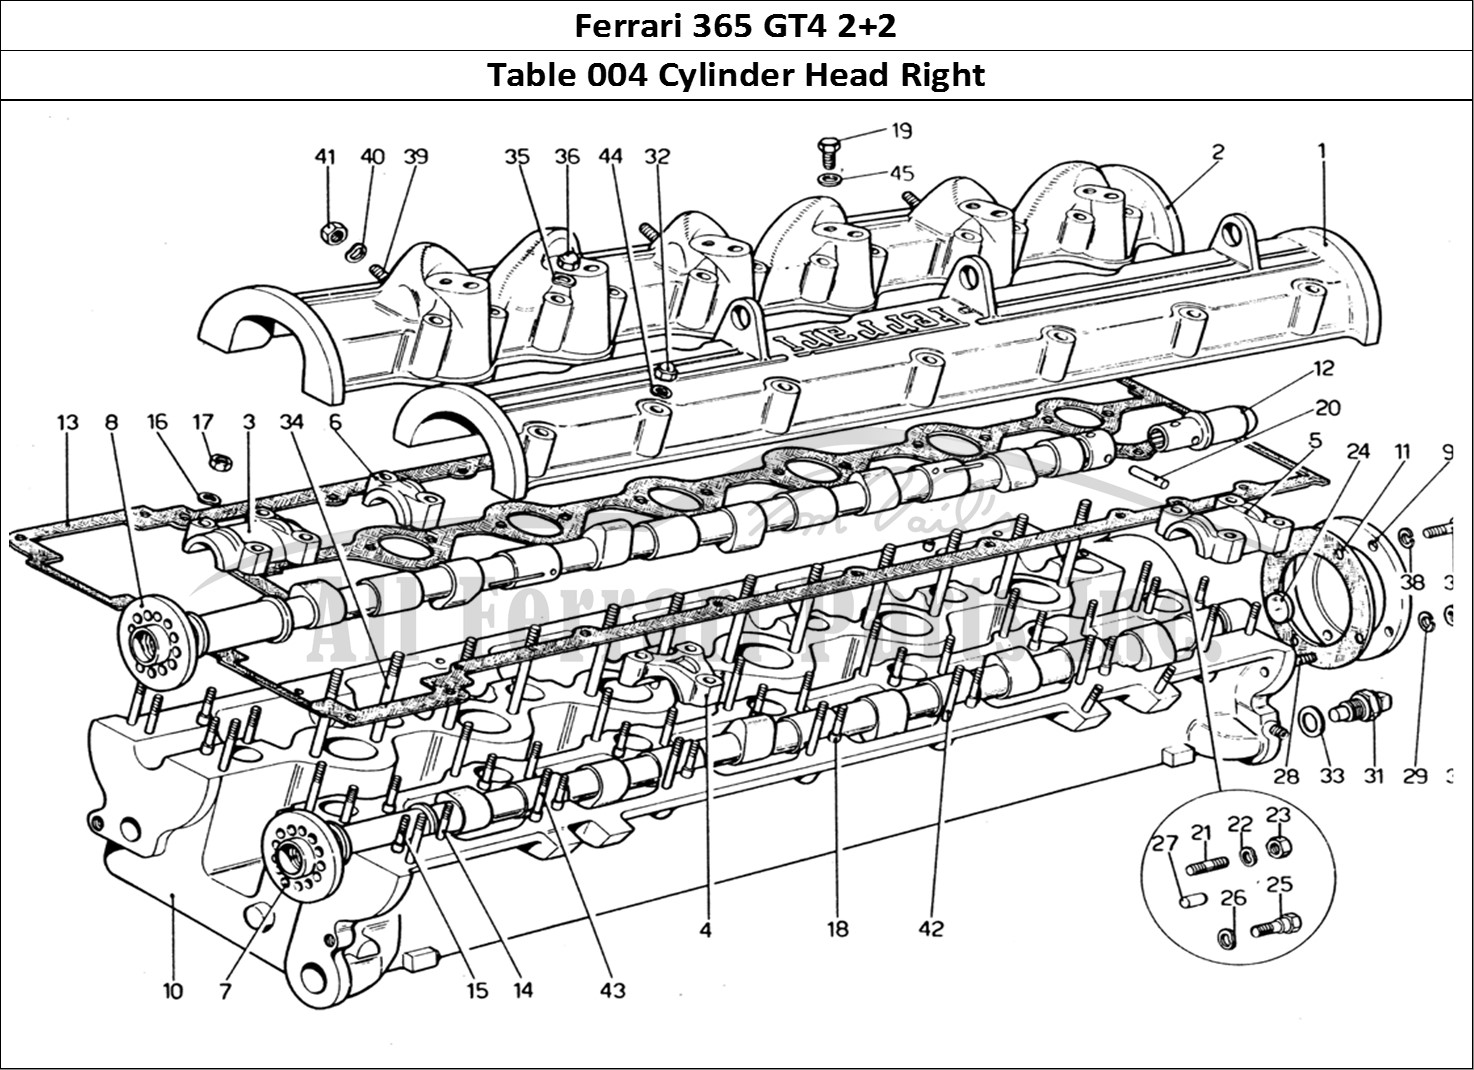 Ferrari Parts Ferrari 365 GT4 2+2 (1973) Page 004 Cylinder Head (Right)